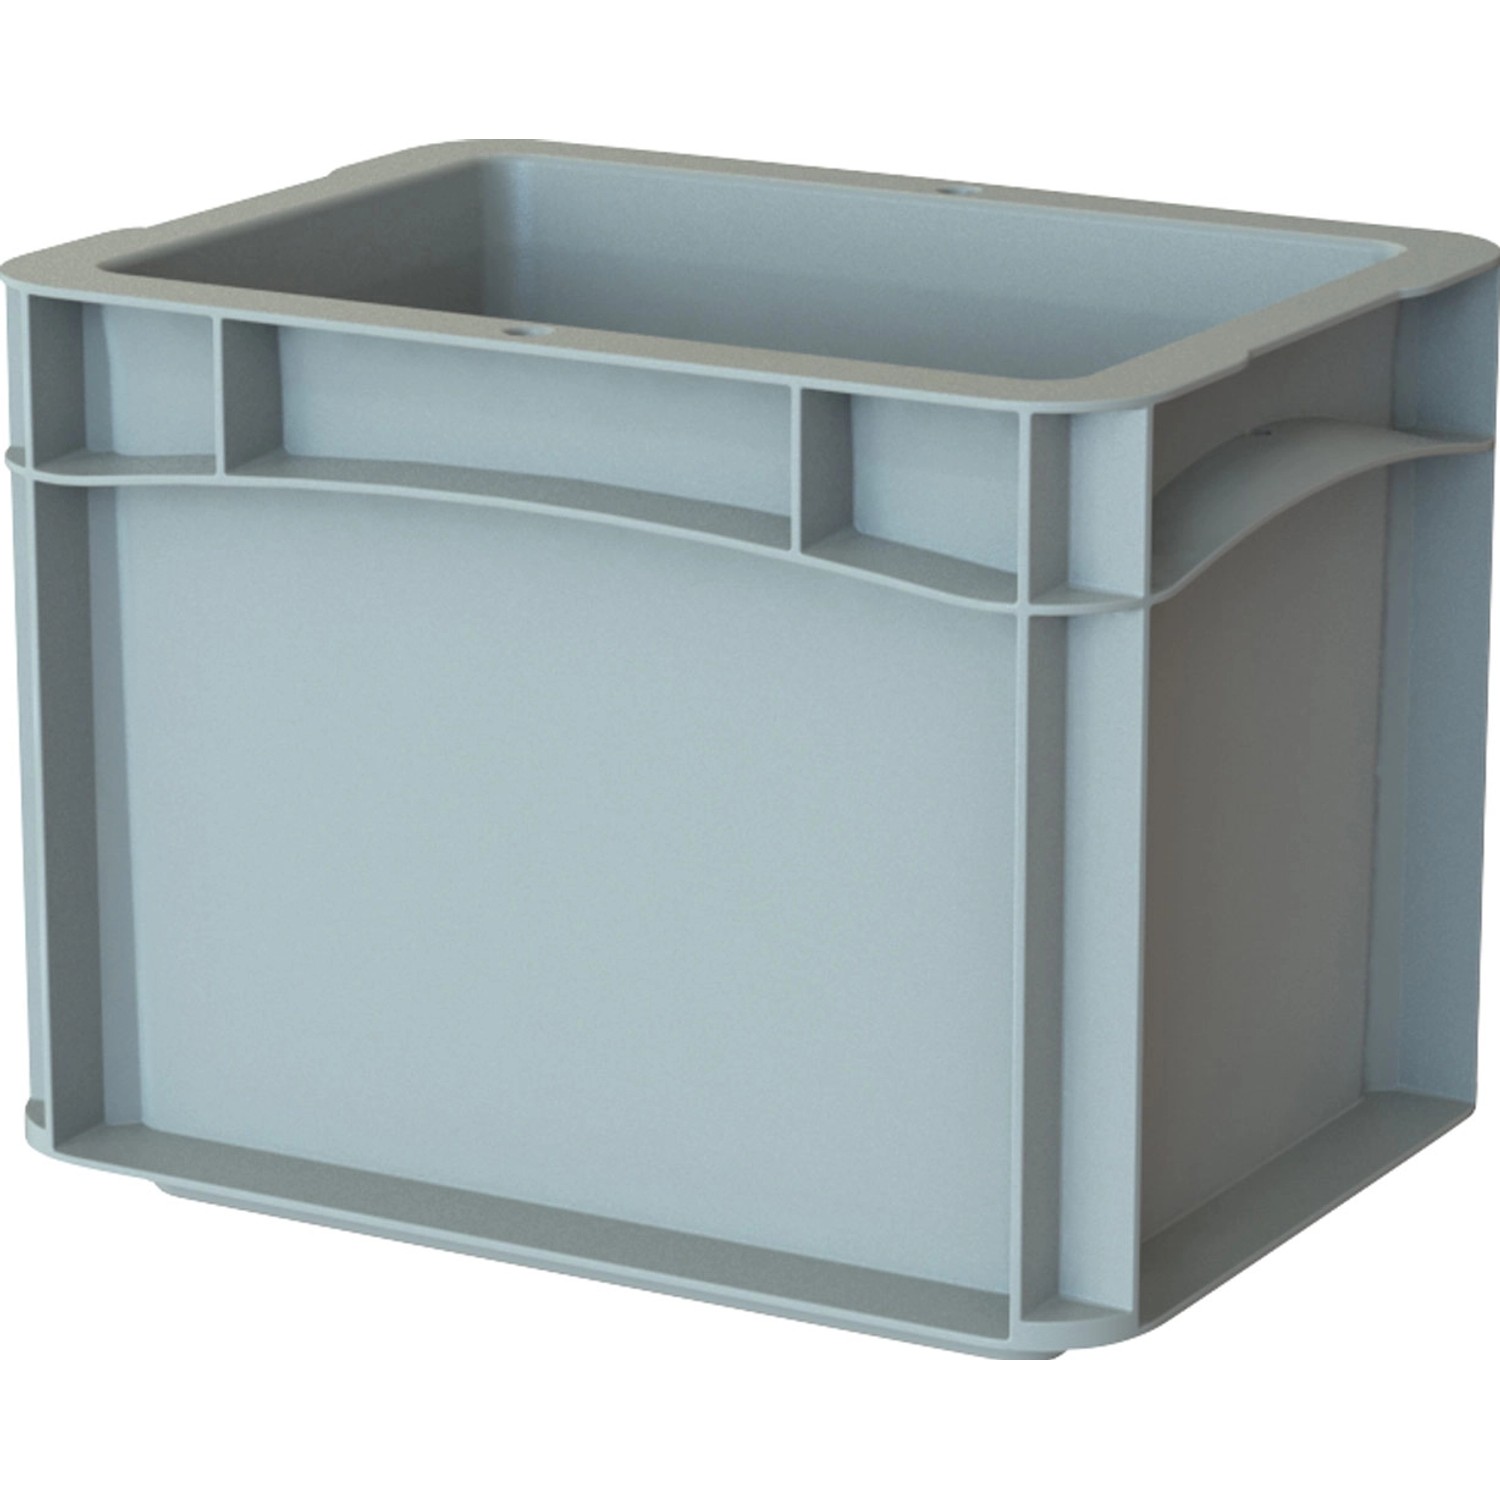 Eurobox-System Box Vollwand 30 x 20 x 22 cm Grau von Eurobox-System